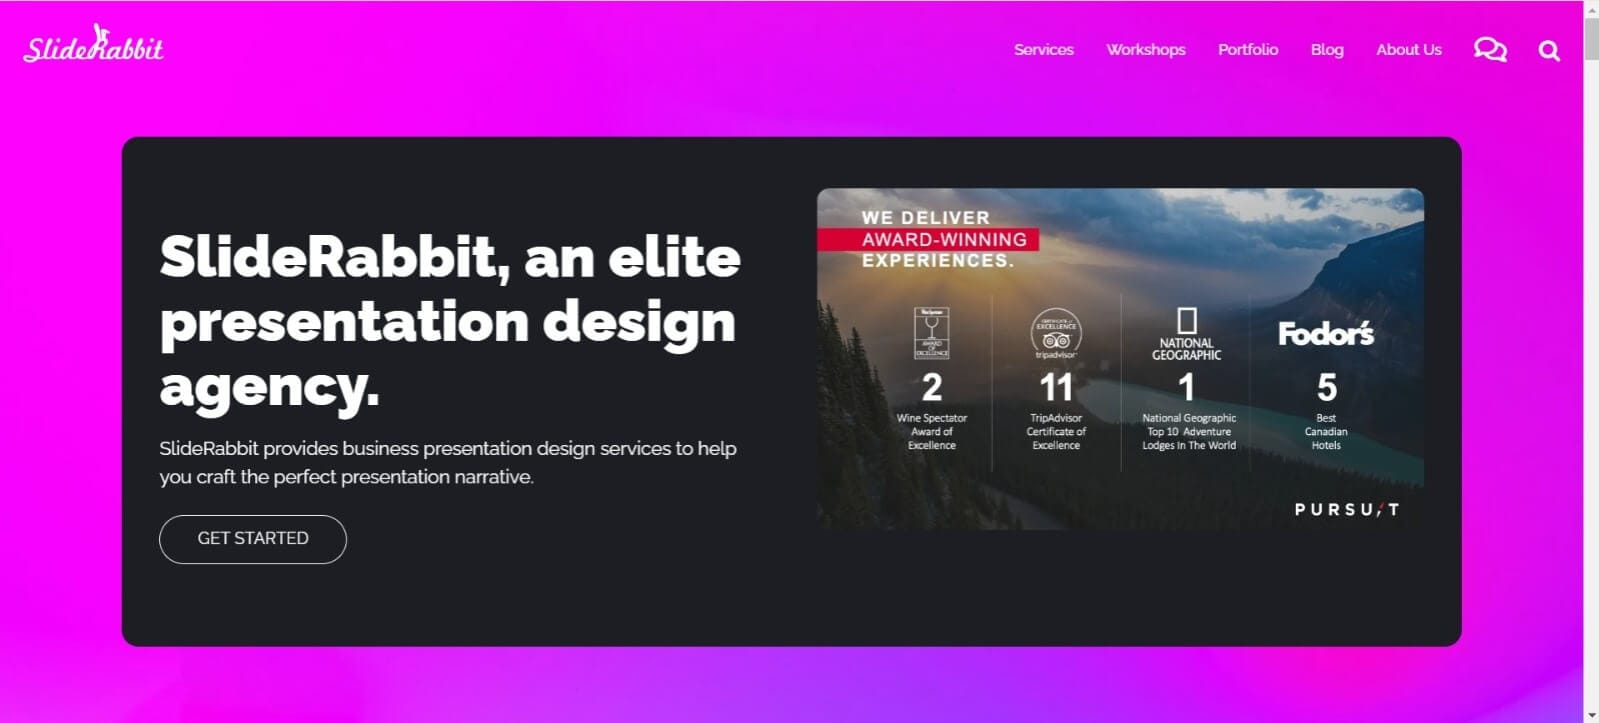 SlideRabbit Design Agency